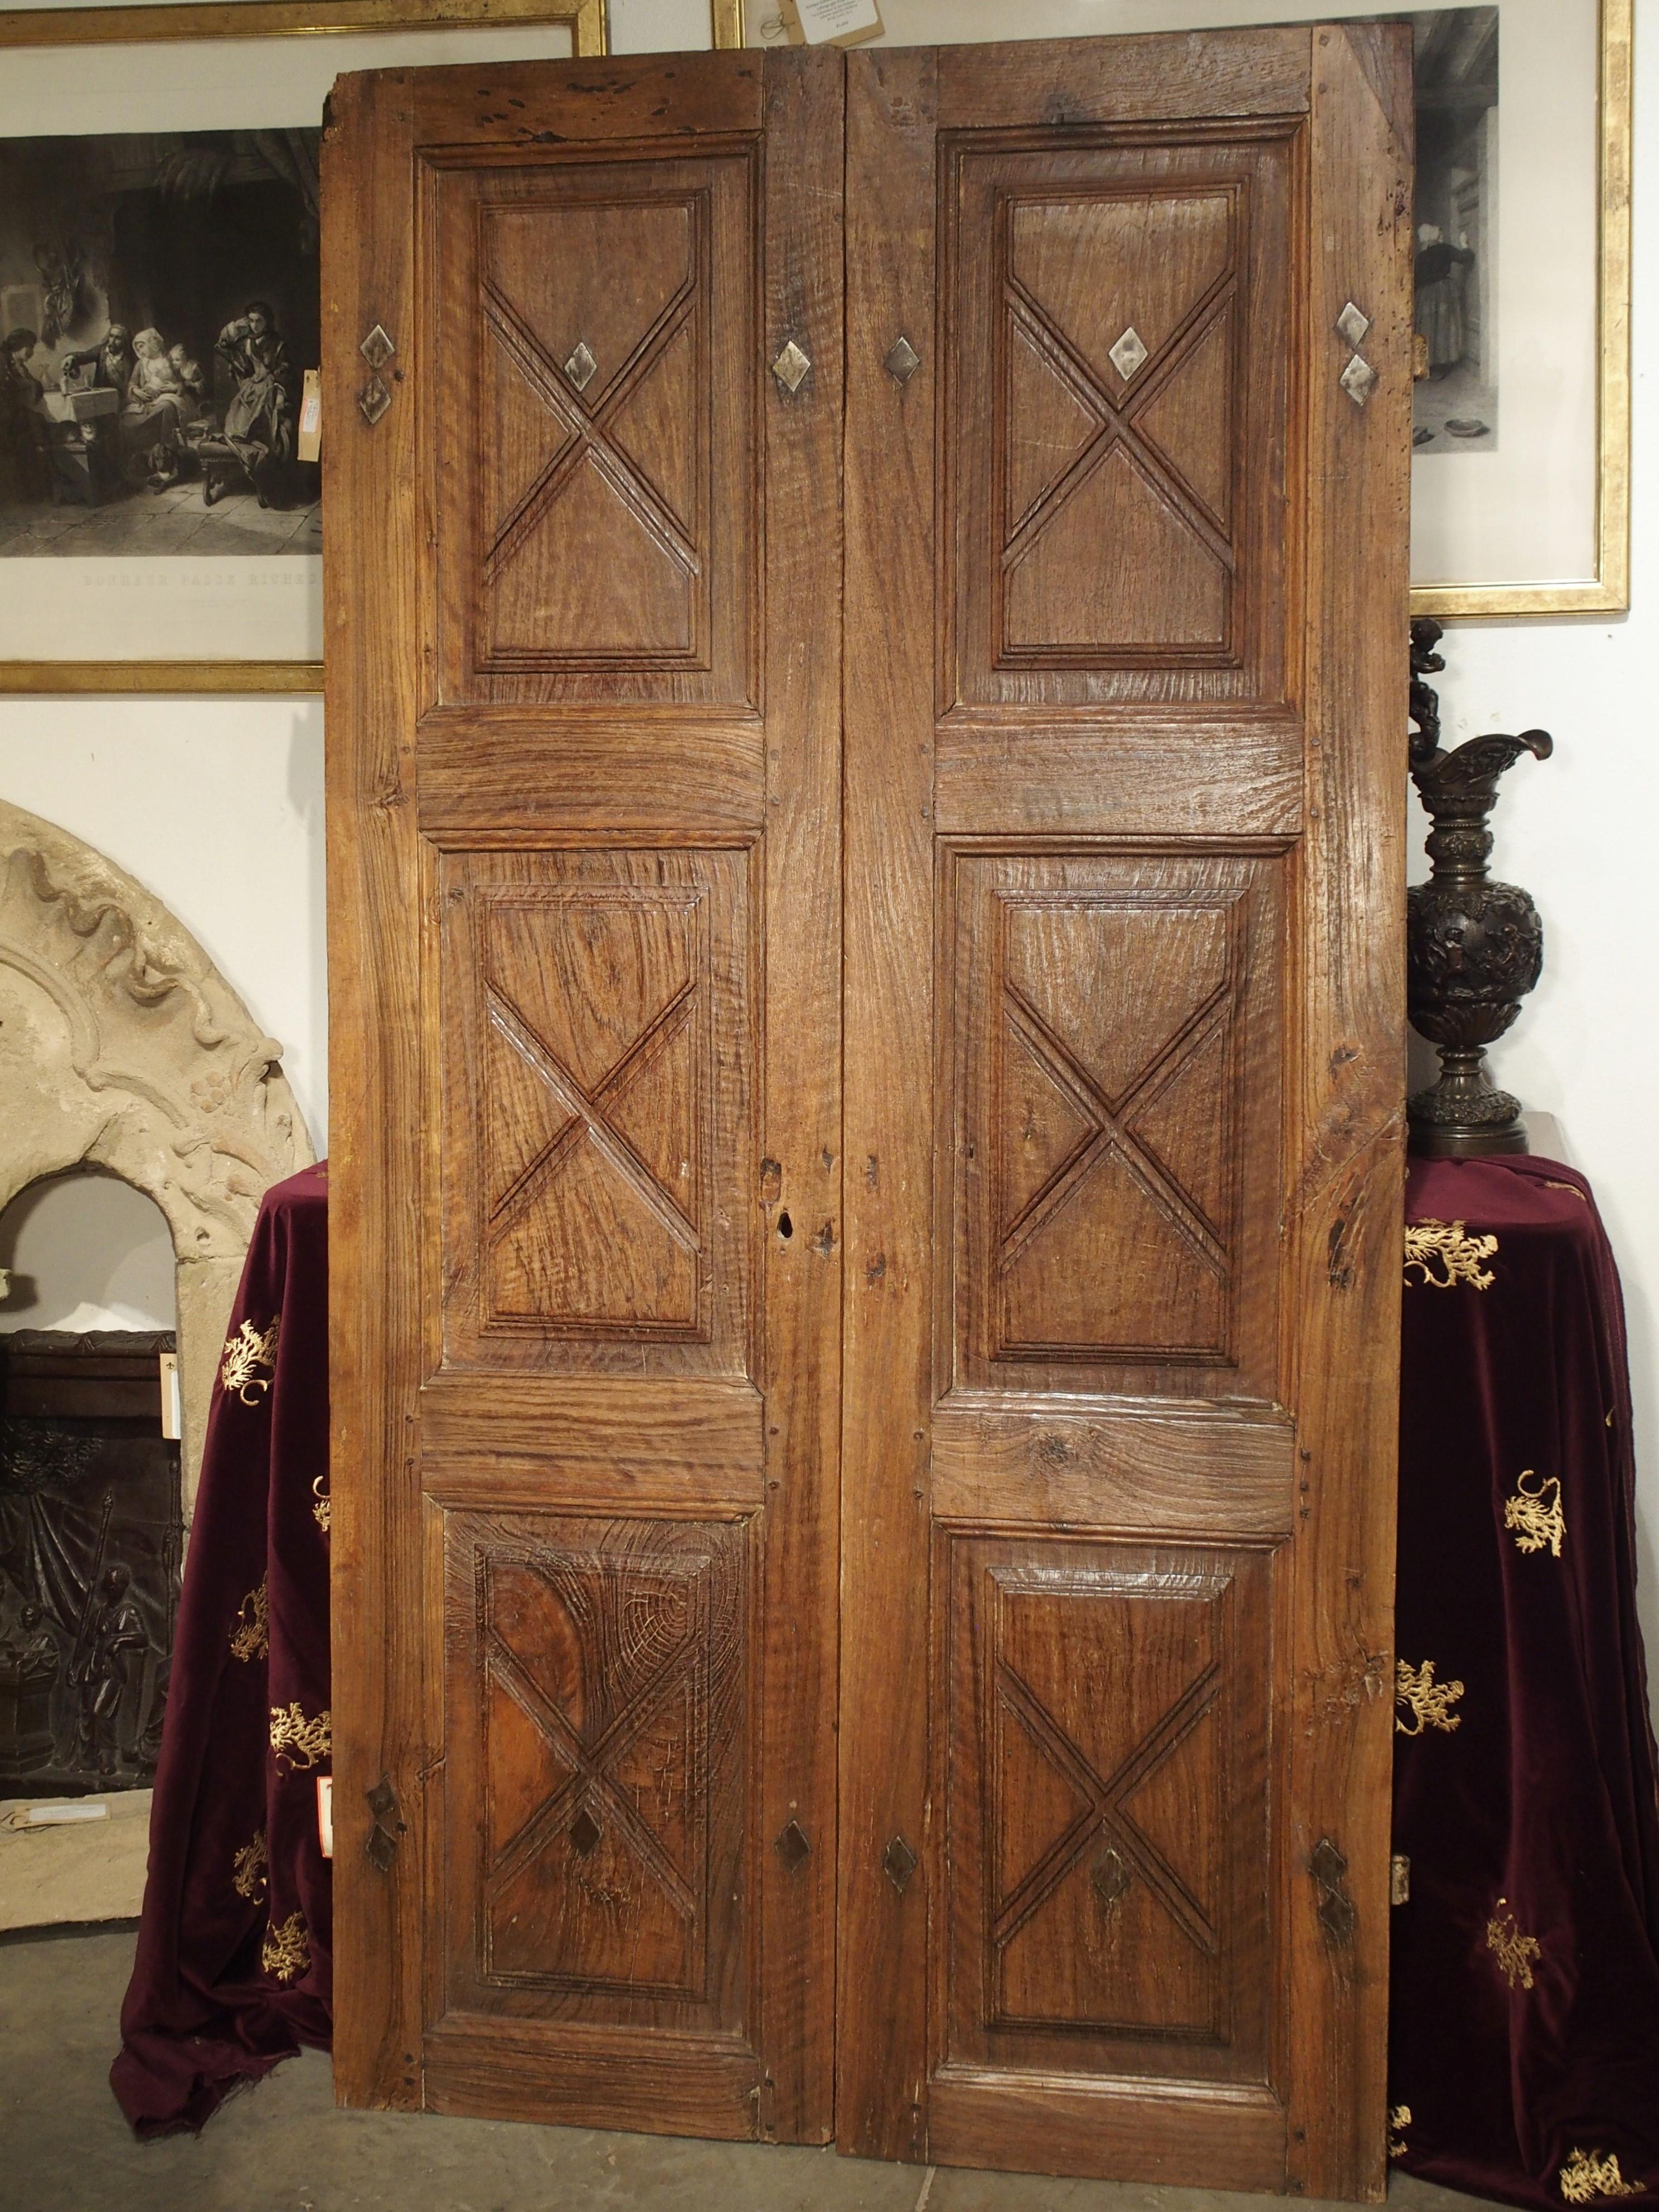 Italian Pair of circa 1700 Doors from the Piedmont Region of Italy